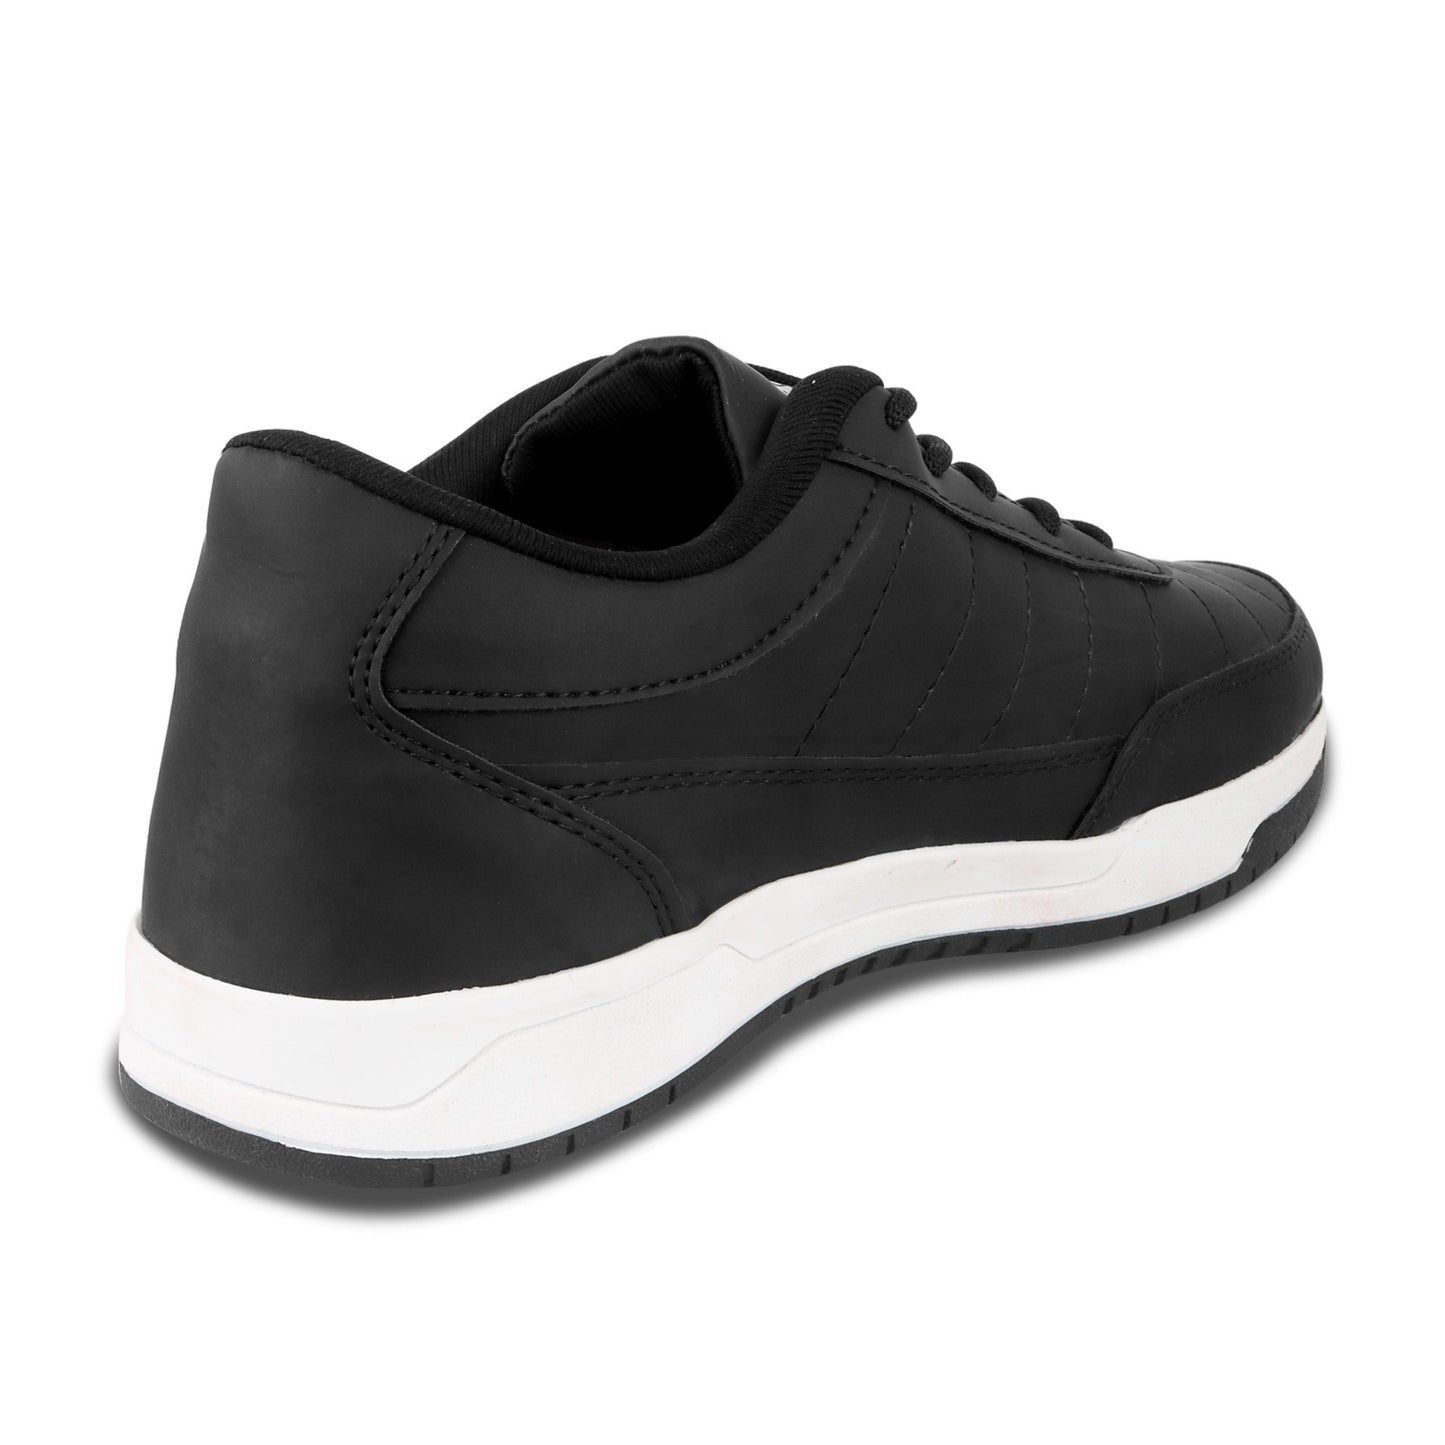 Richale Segastar Black Mens Casual Shoes